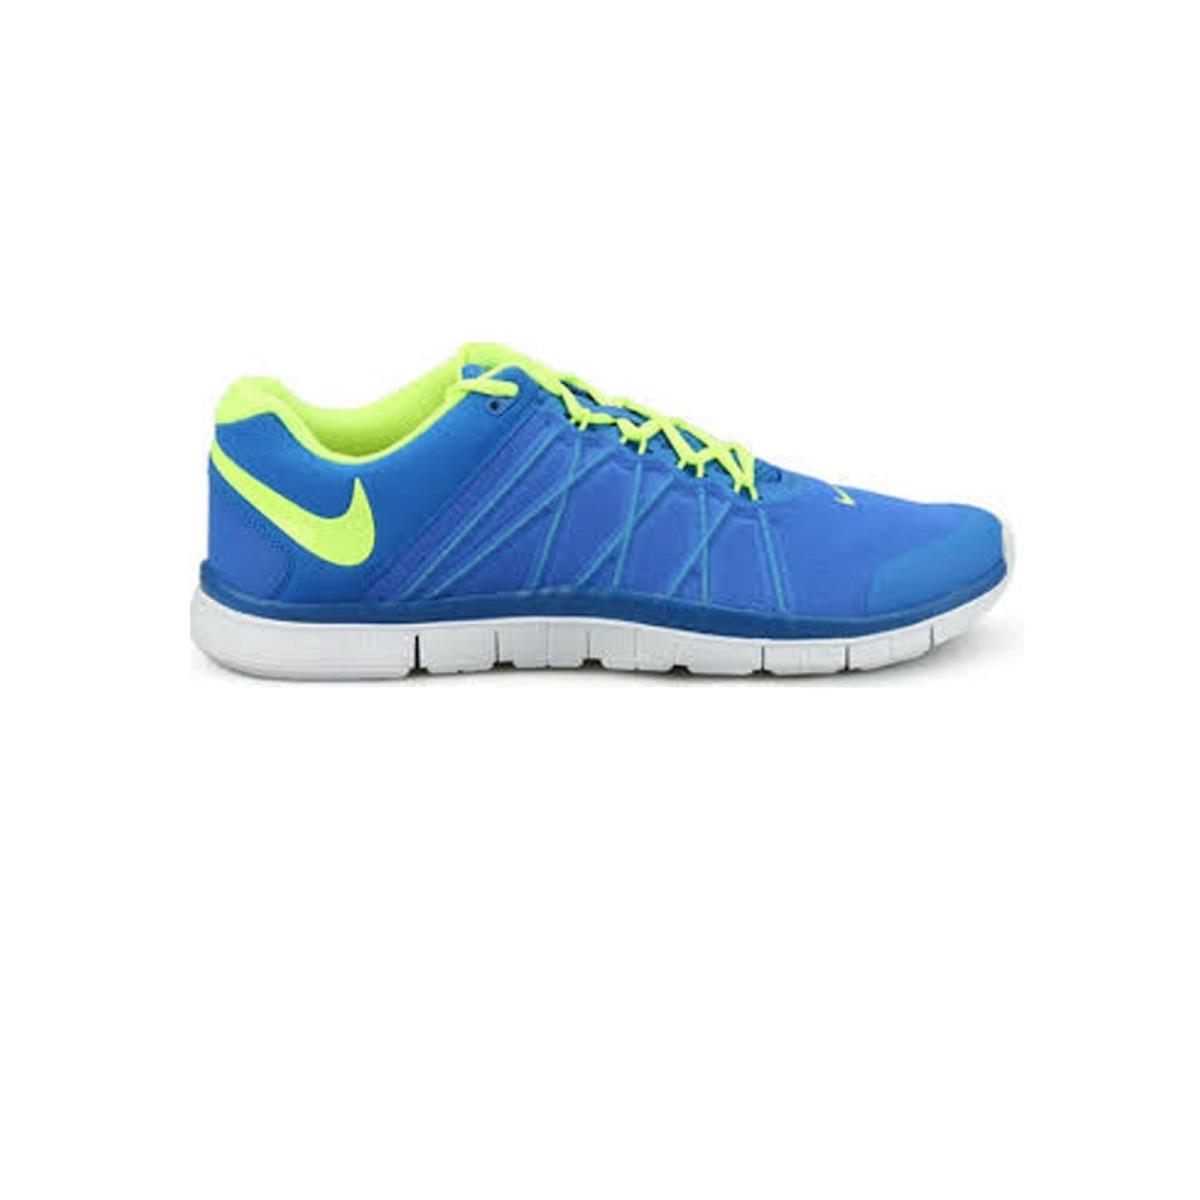 Nike Men`s Free Trainer 3.0 Shoes Blue/volt/white 630856-402 - Blue/Volt/White , Blue/Volt/White Manufacturer